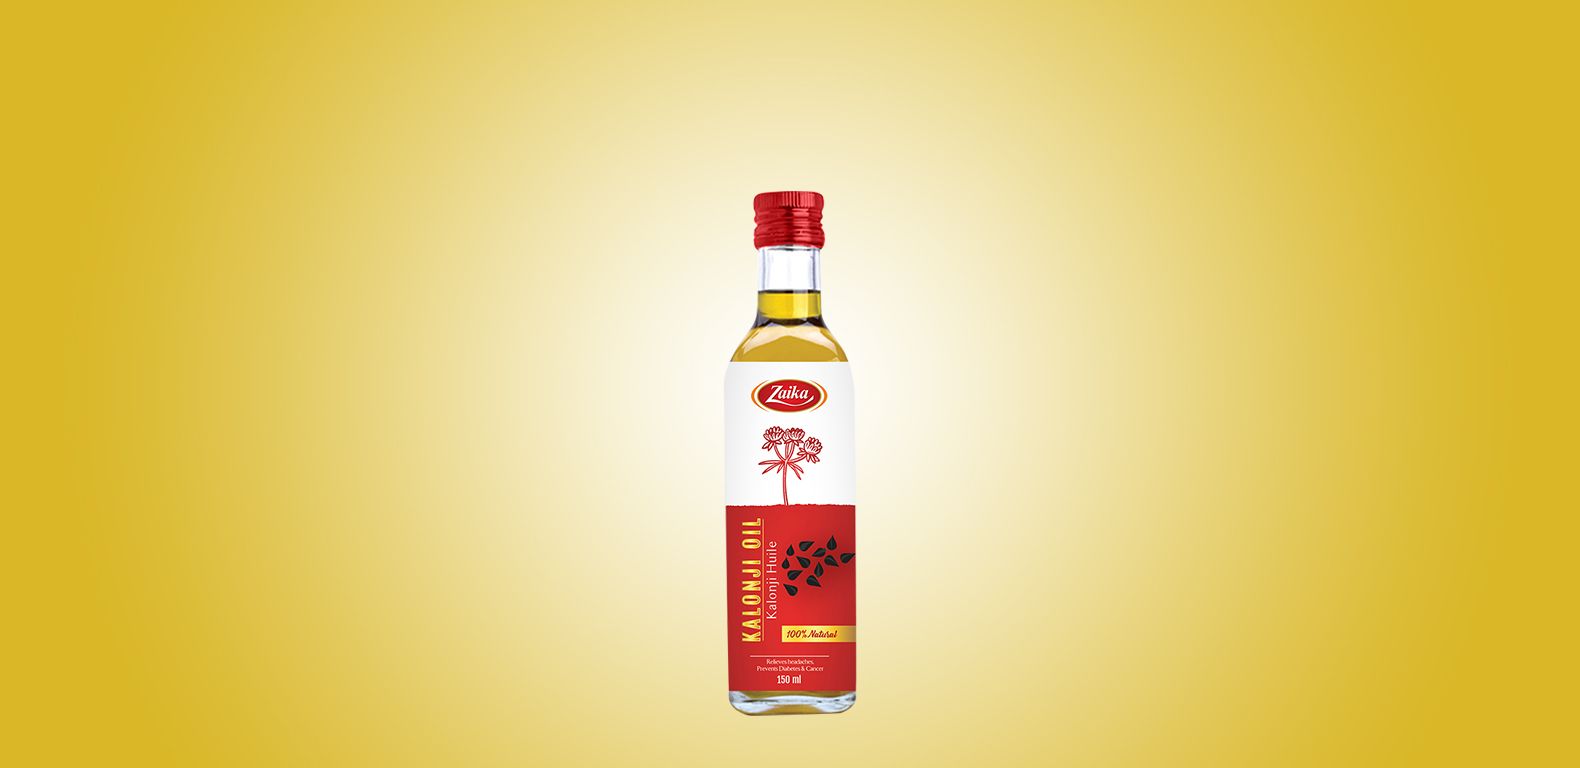 Packaging-Design-Zaiqa-oil-small-bottle